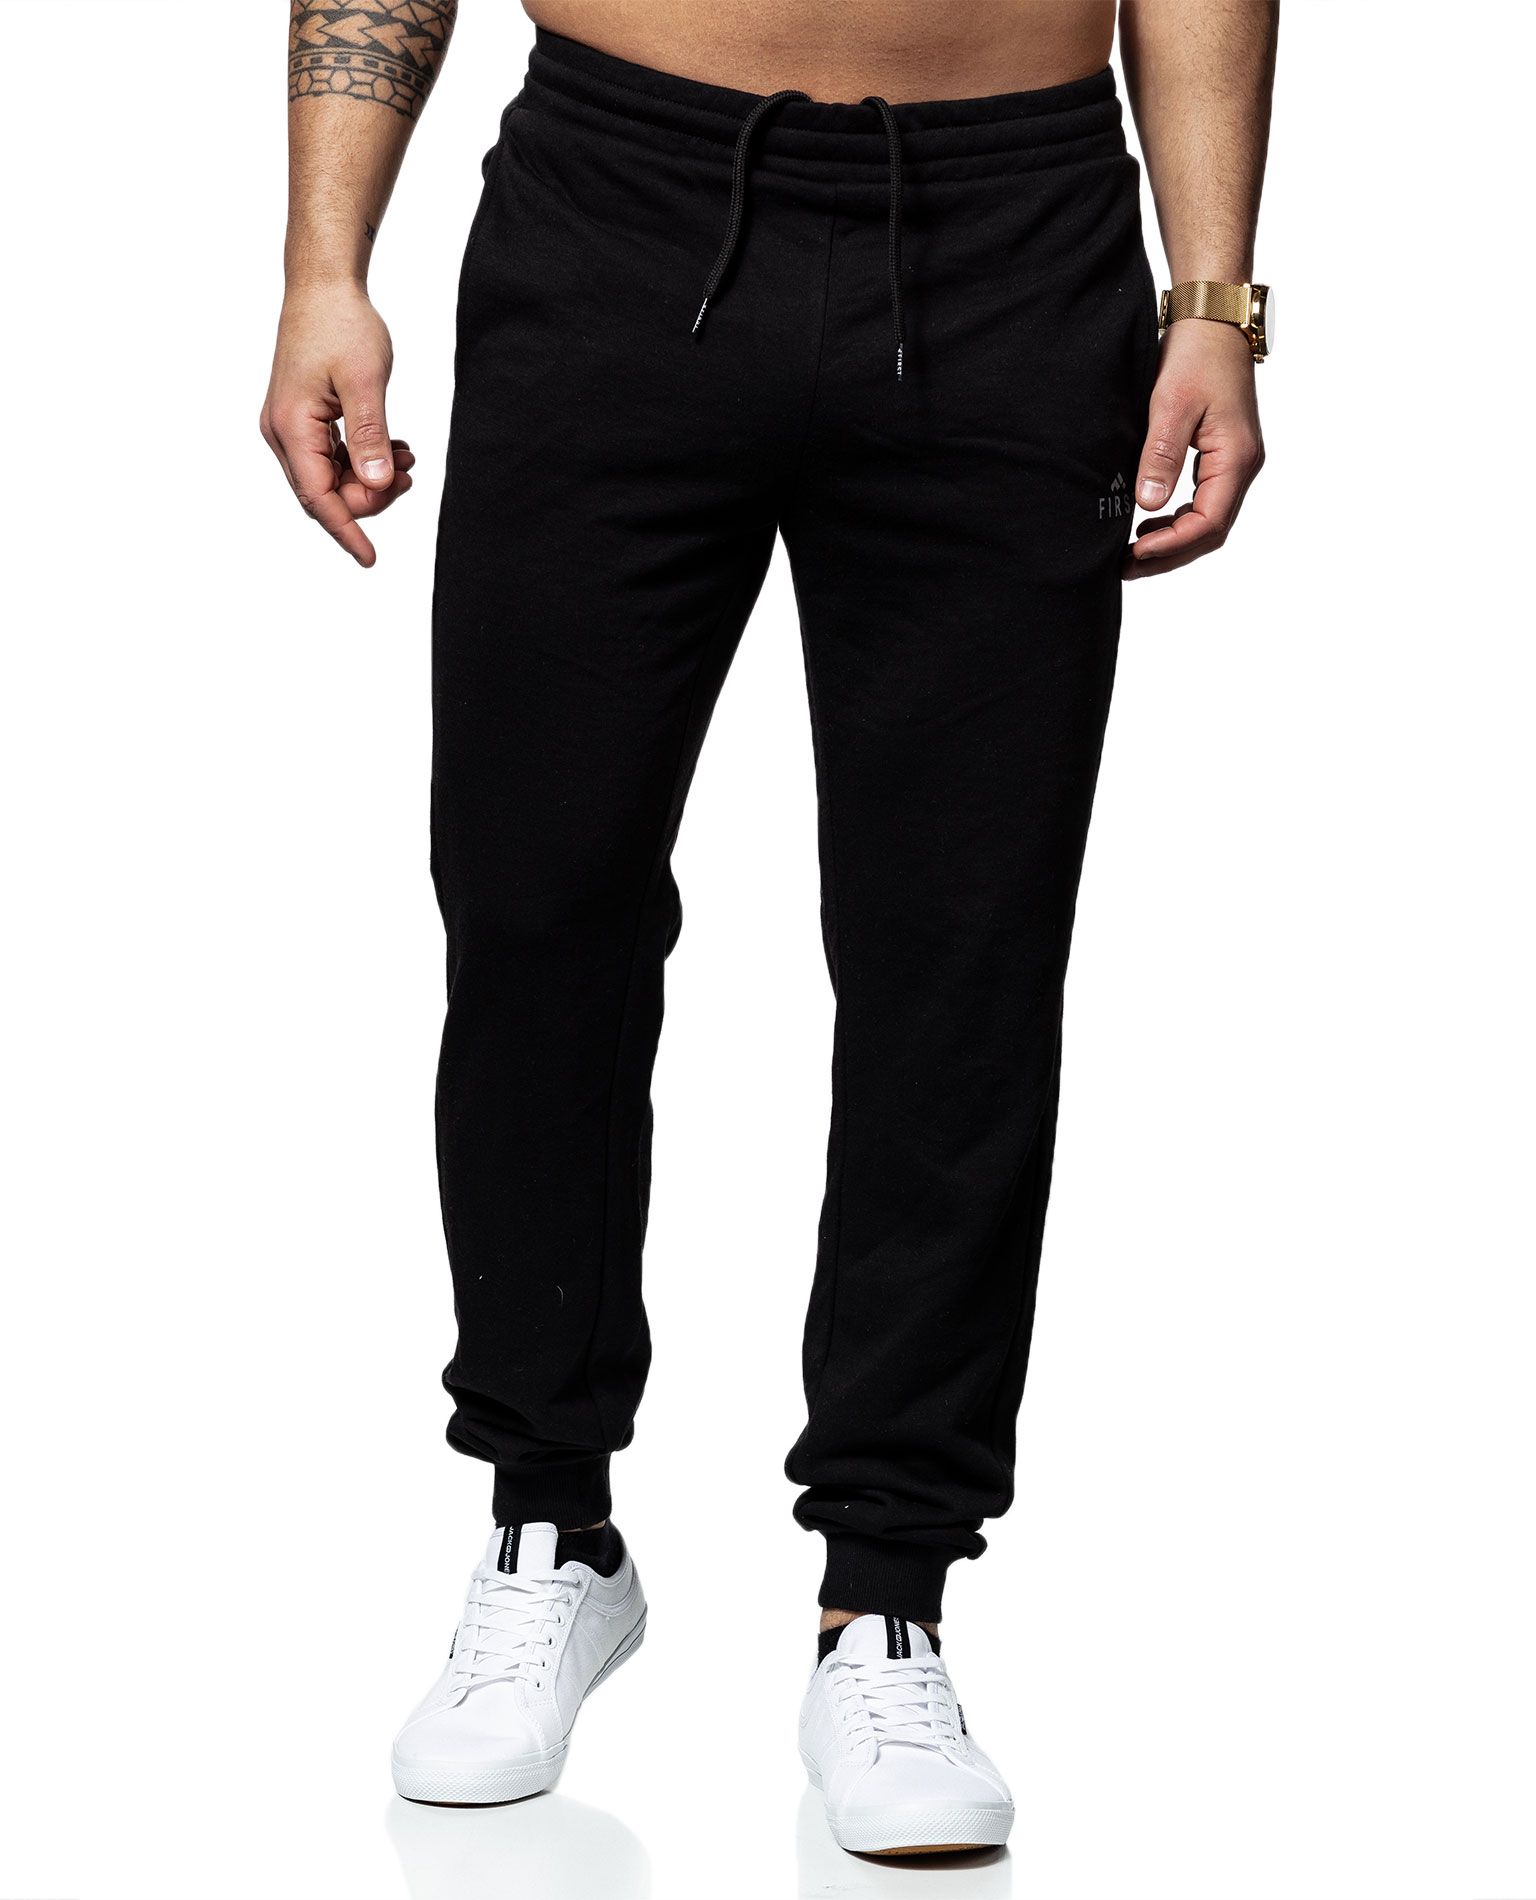 Travis Sweat Pants Black FIRST - 5711 - Sportswear - Jerone.com